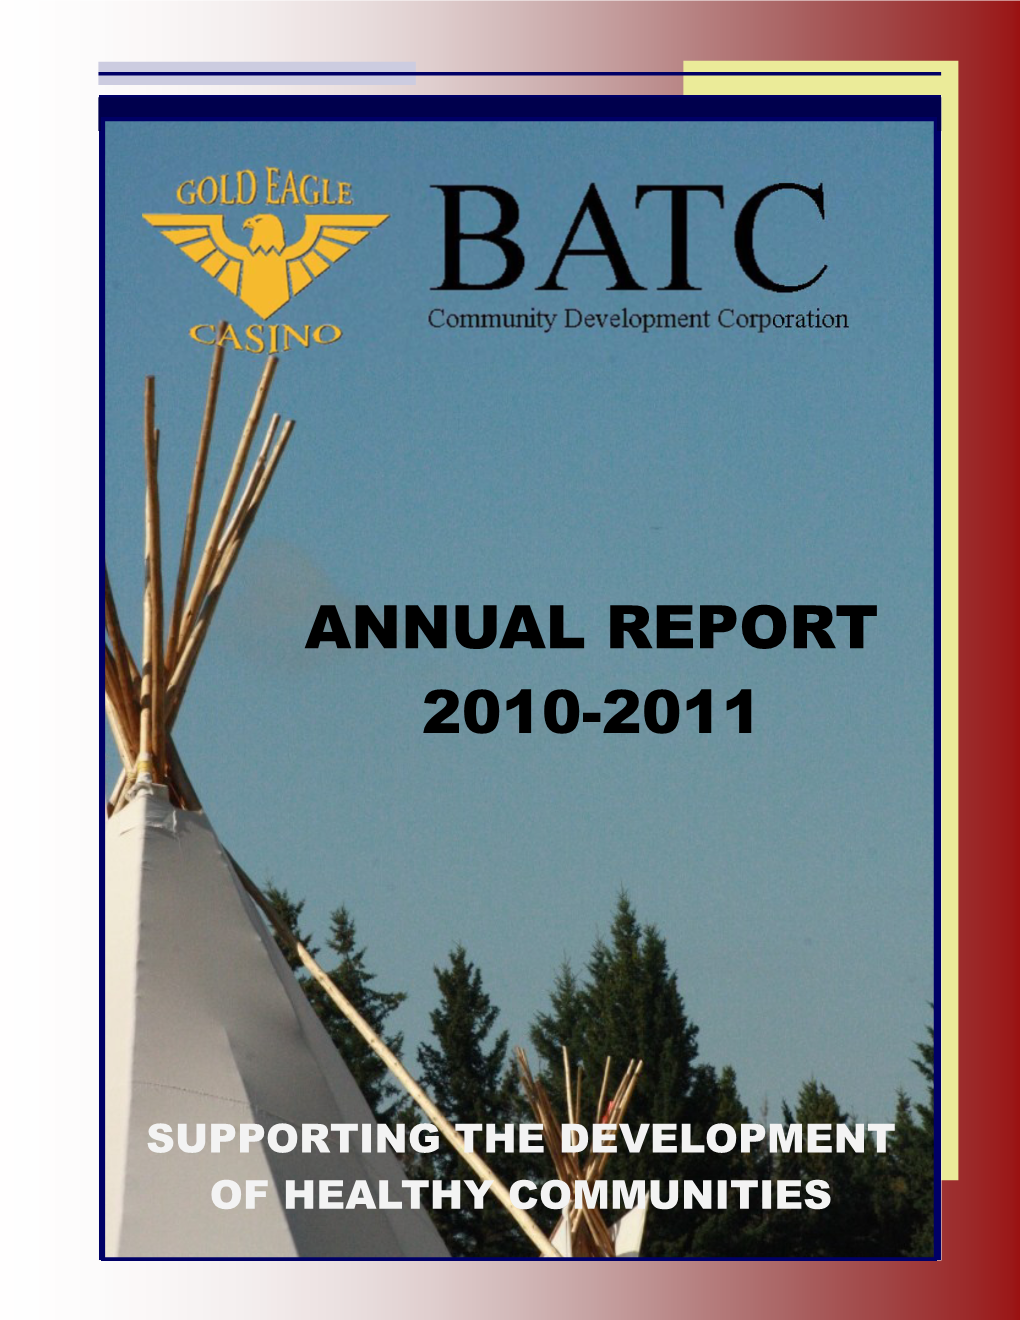 BATC CDC Annual Report 2010-2011